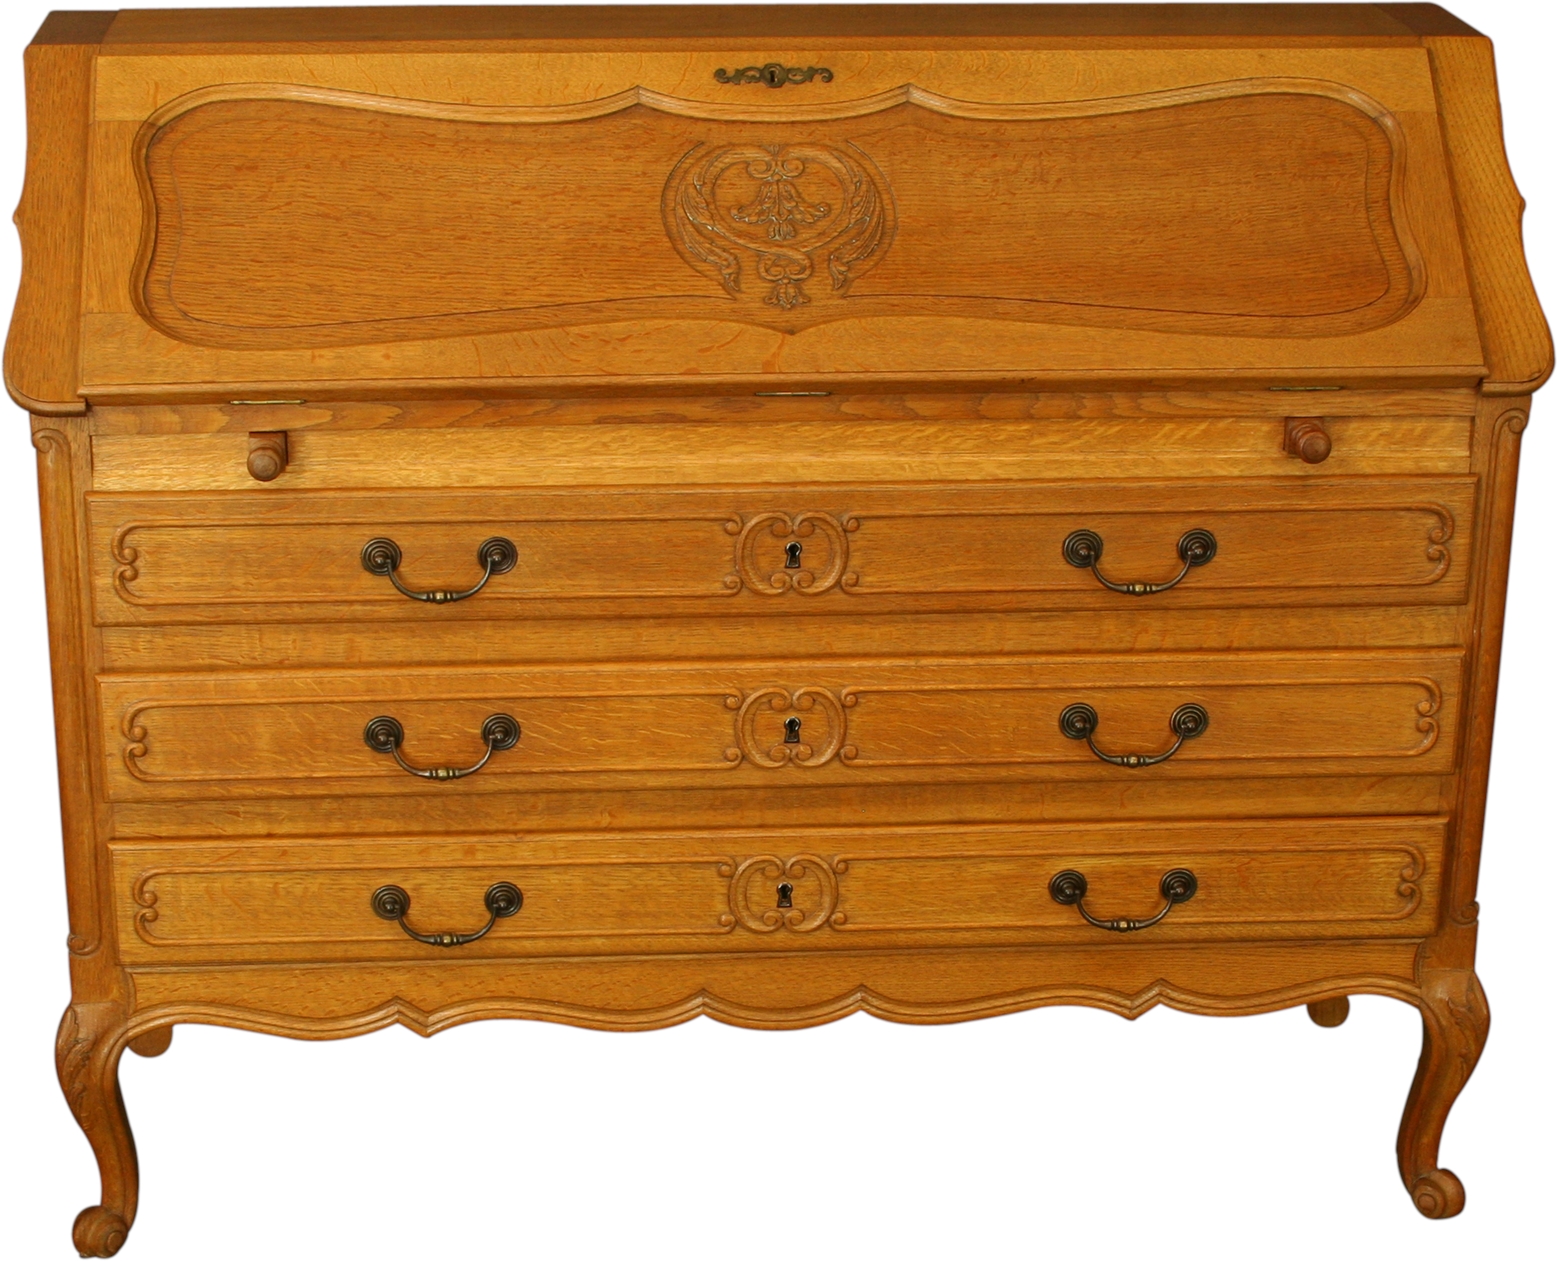 Vintage French Secretary Desk, Quartersawn Golden Oak, Carved, Louis XV Style-Image 2